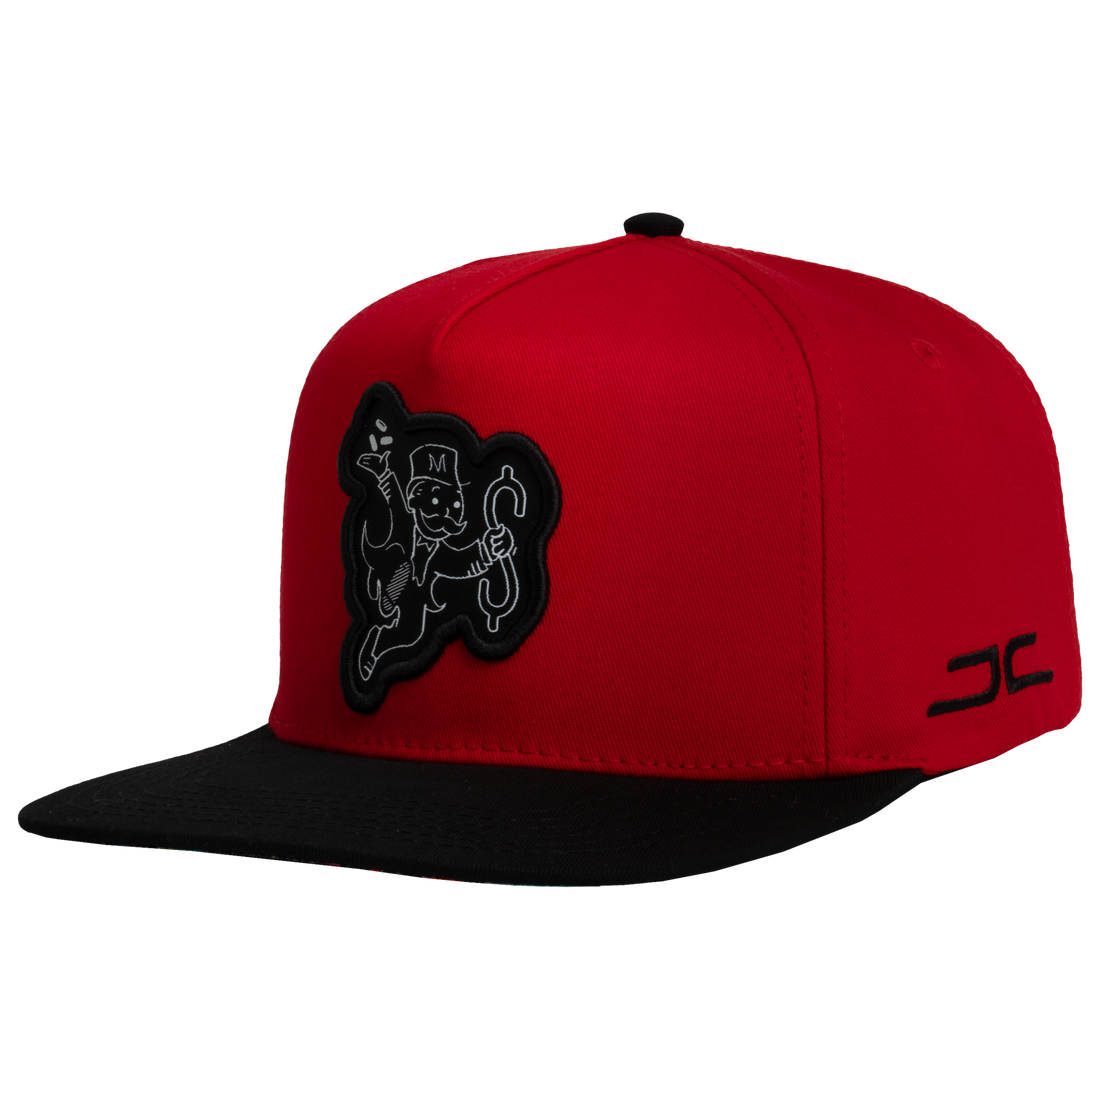 Monopoli rojo Jc Hats